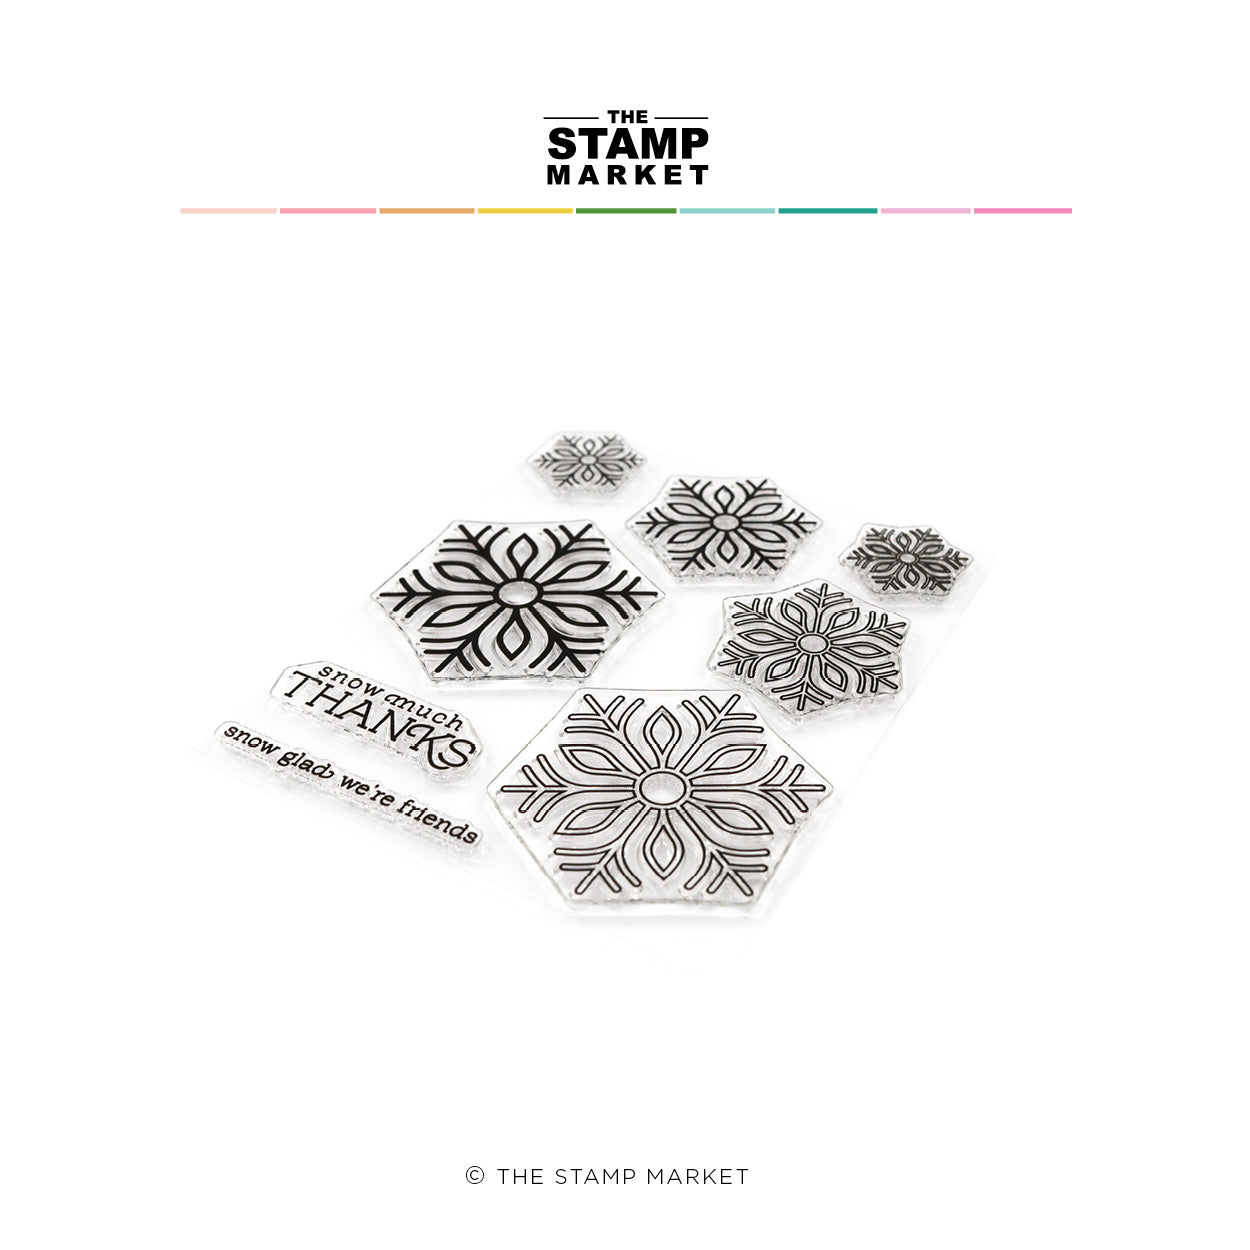 SEASON'S SNOWFLAKE STAMP – The Stamp Market